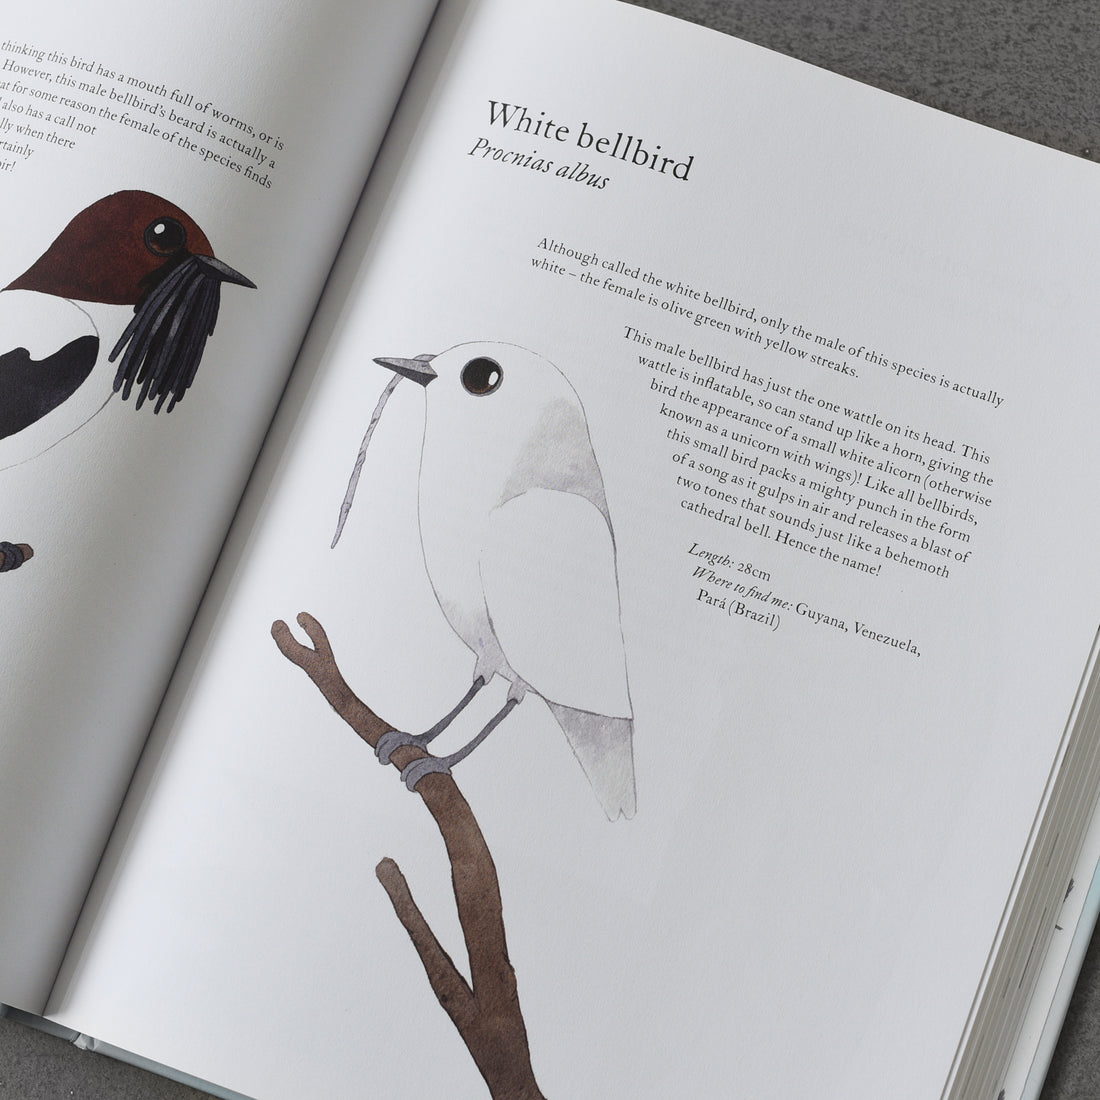 Atlas niesamowitych ptaków – Matt Sewell